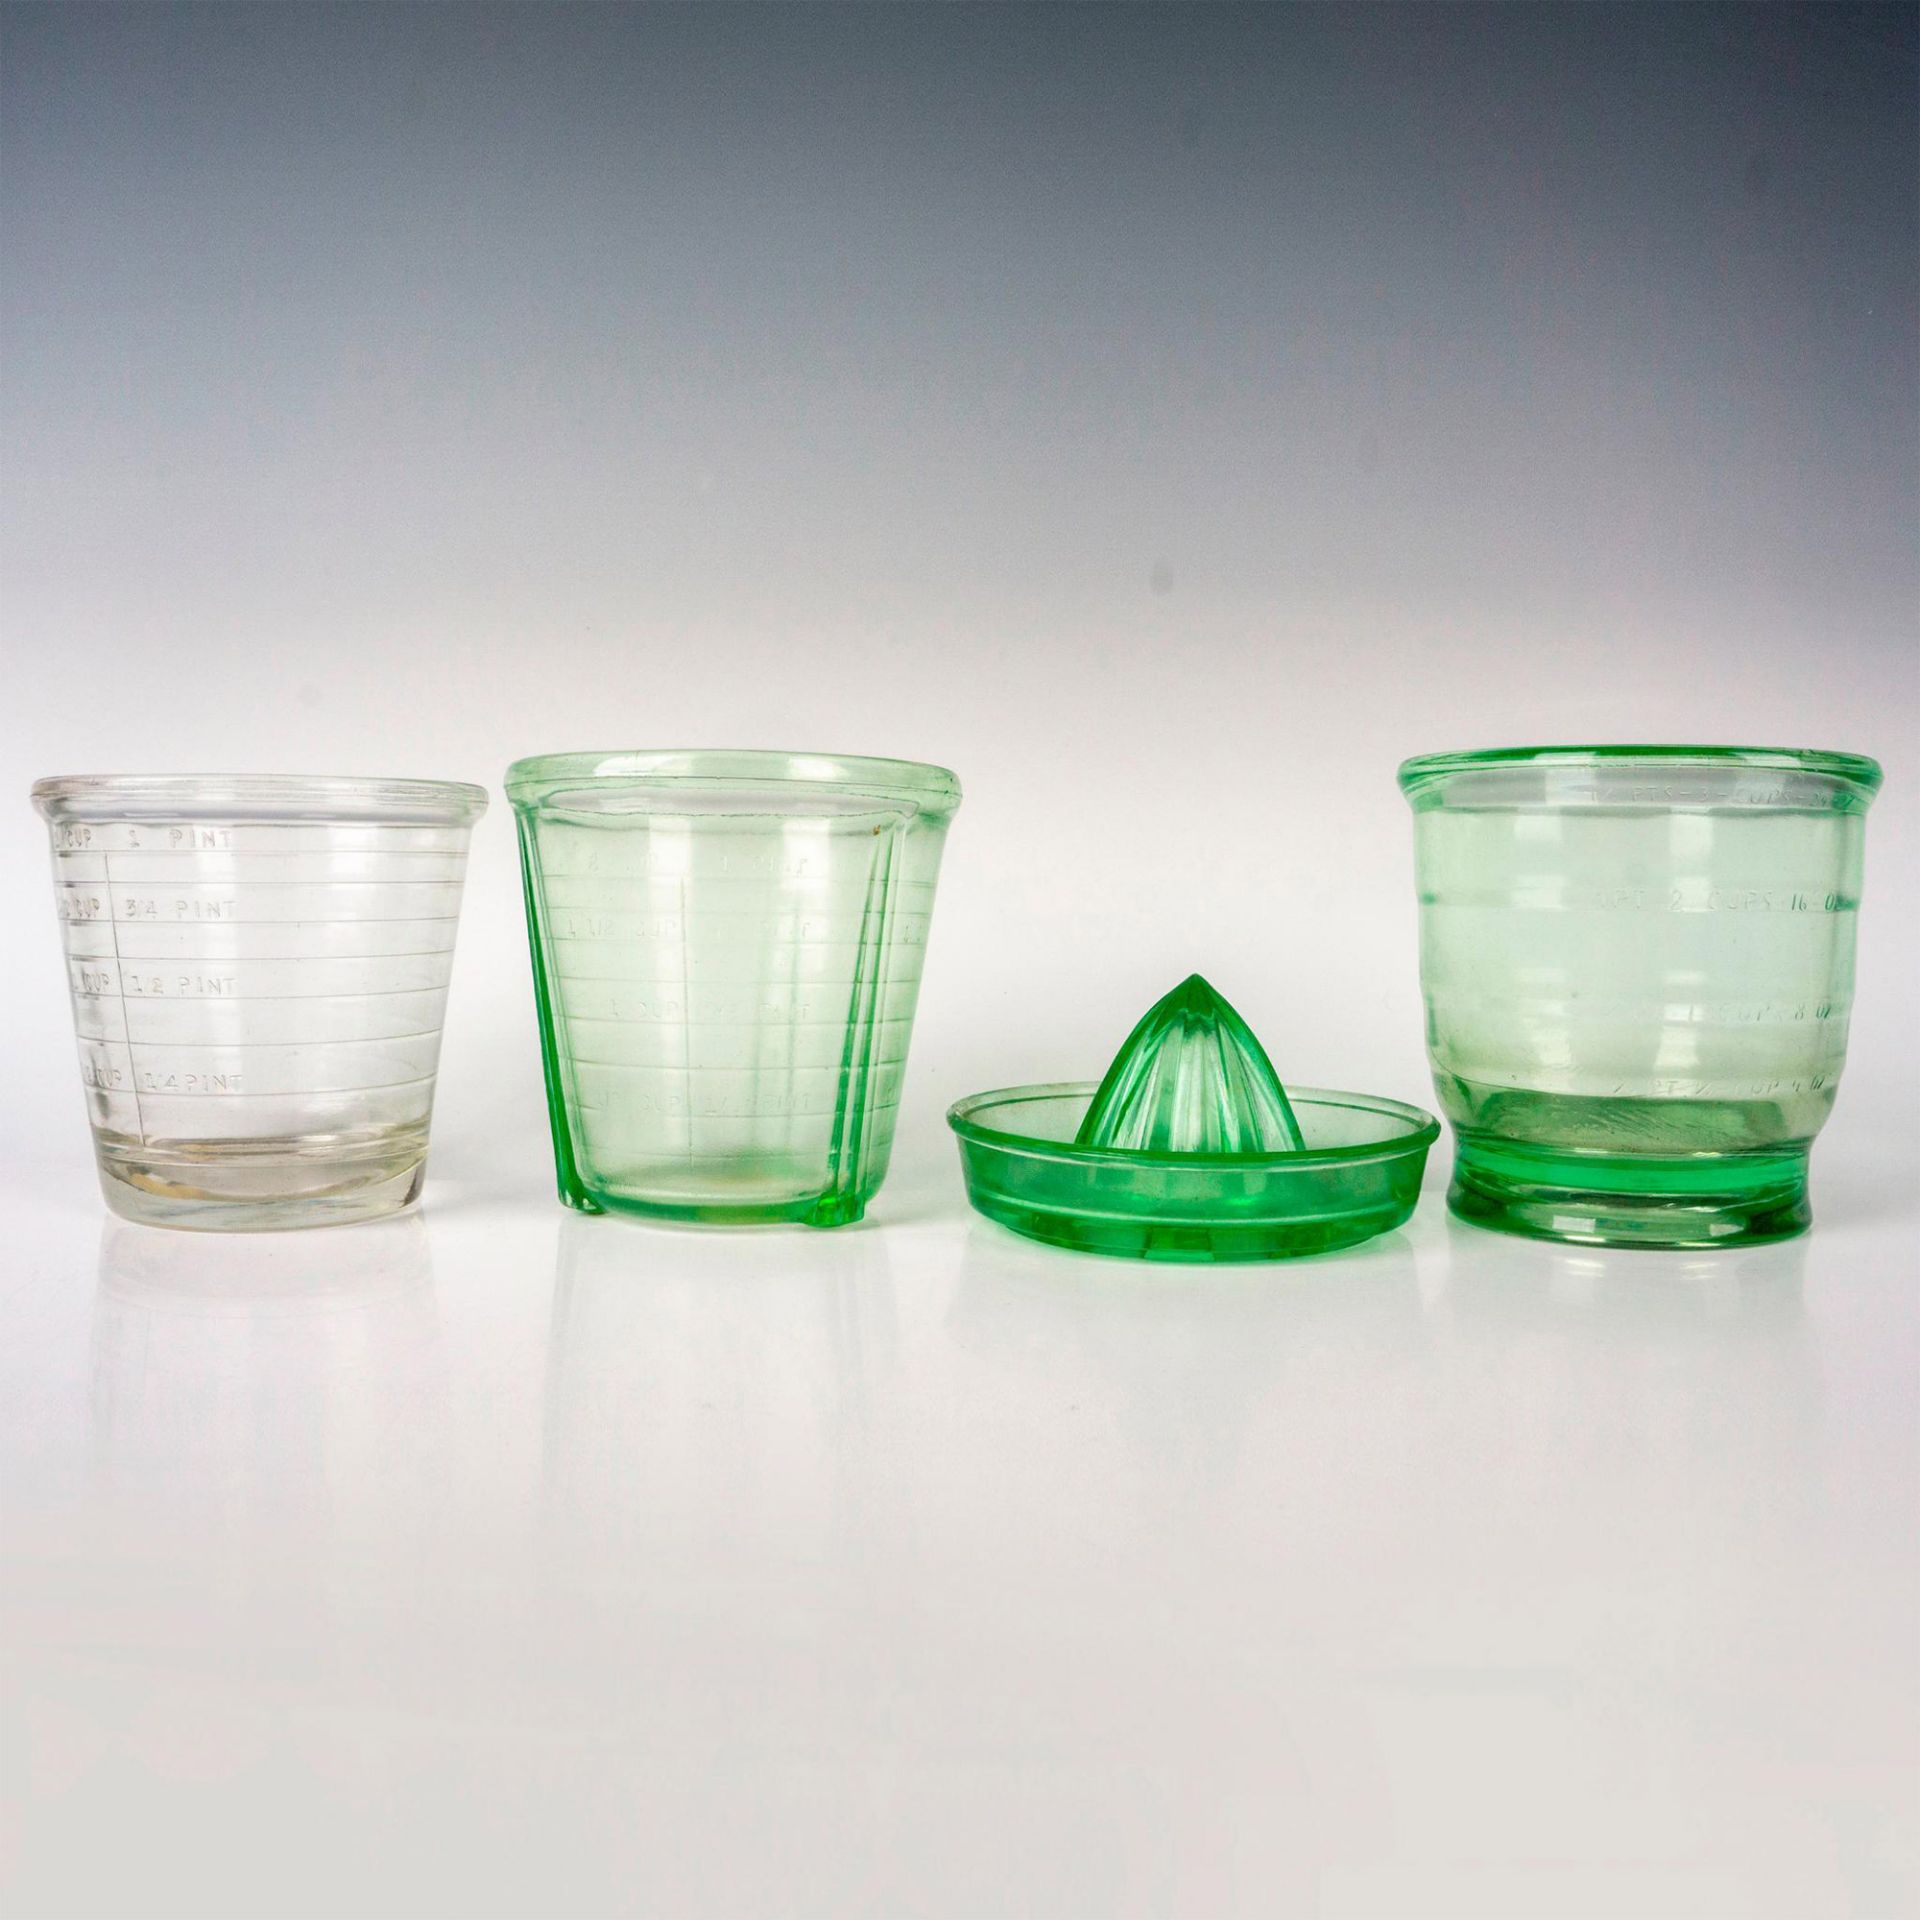 4pc Vintage Glass Measuring Cups + Juicer